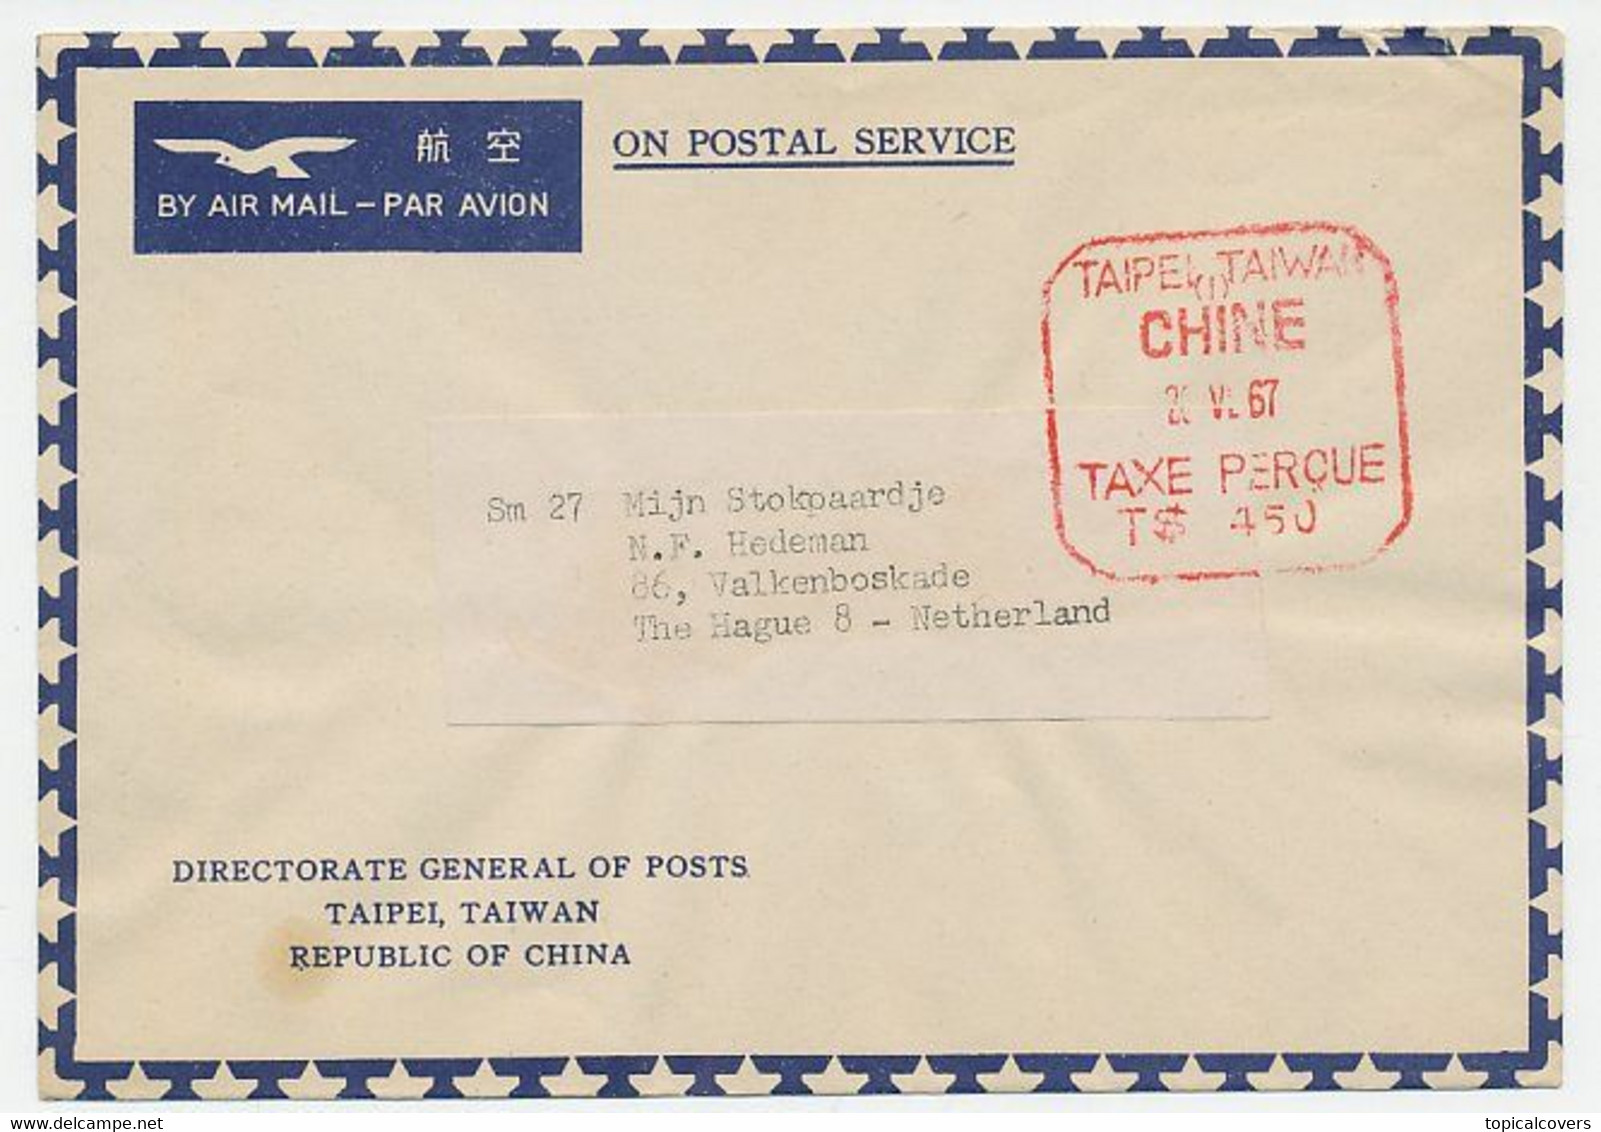 Taxe Percue Service Cover Taipei Taiwan Chine / China - The Netherlands 1967 - Briefe U. Dokumente